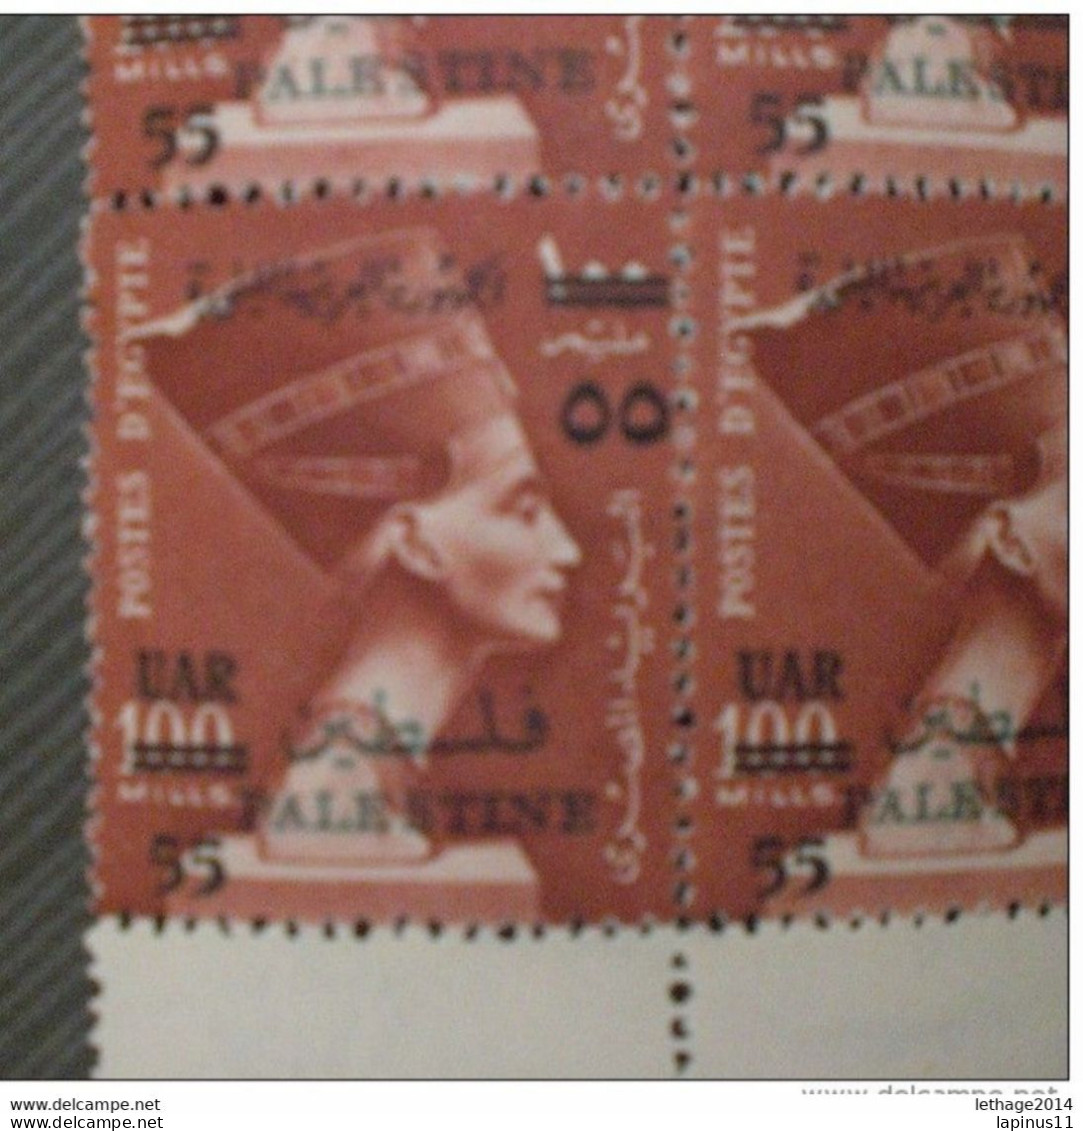 EGITTO EGYPT EGYPTE PALESTINE 1959 Queen Nefertiti UAR Postage Stamps Overprinted "PALESTINE" In English And Arabic MNH - Nuovi